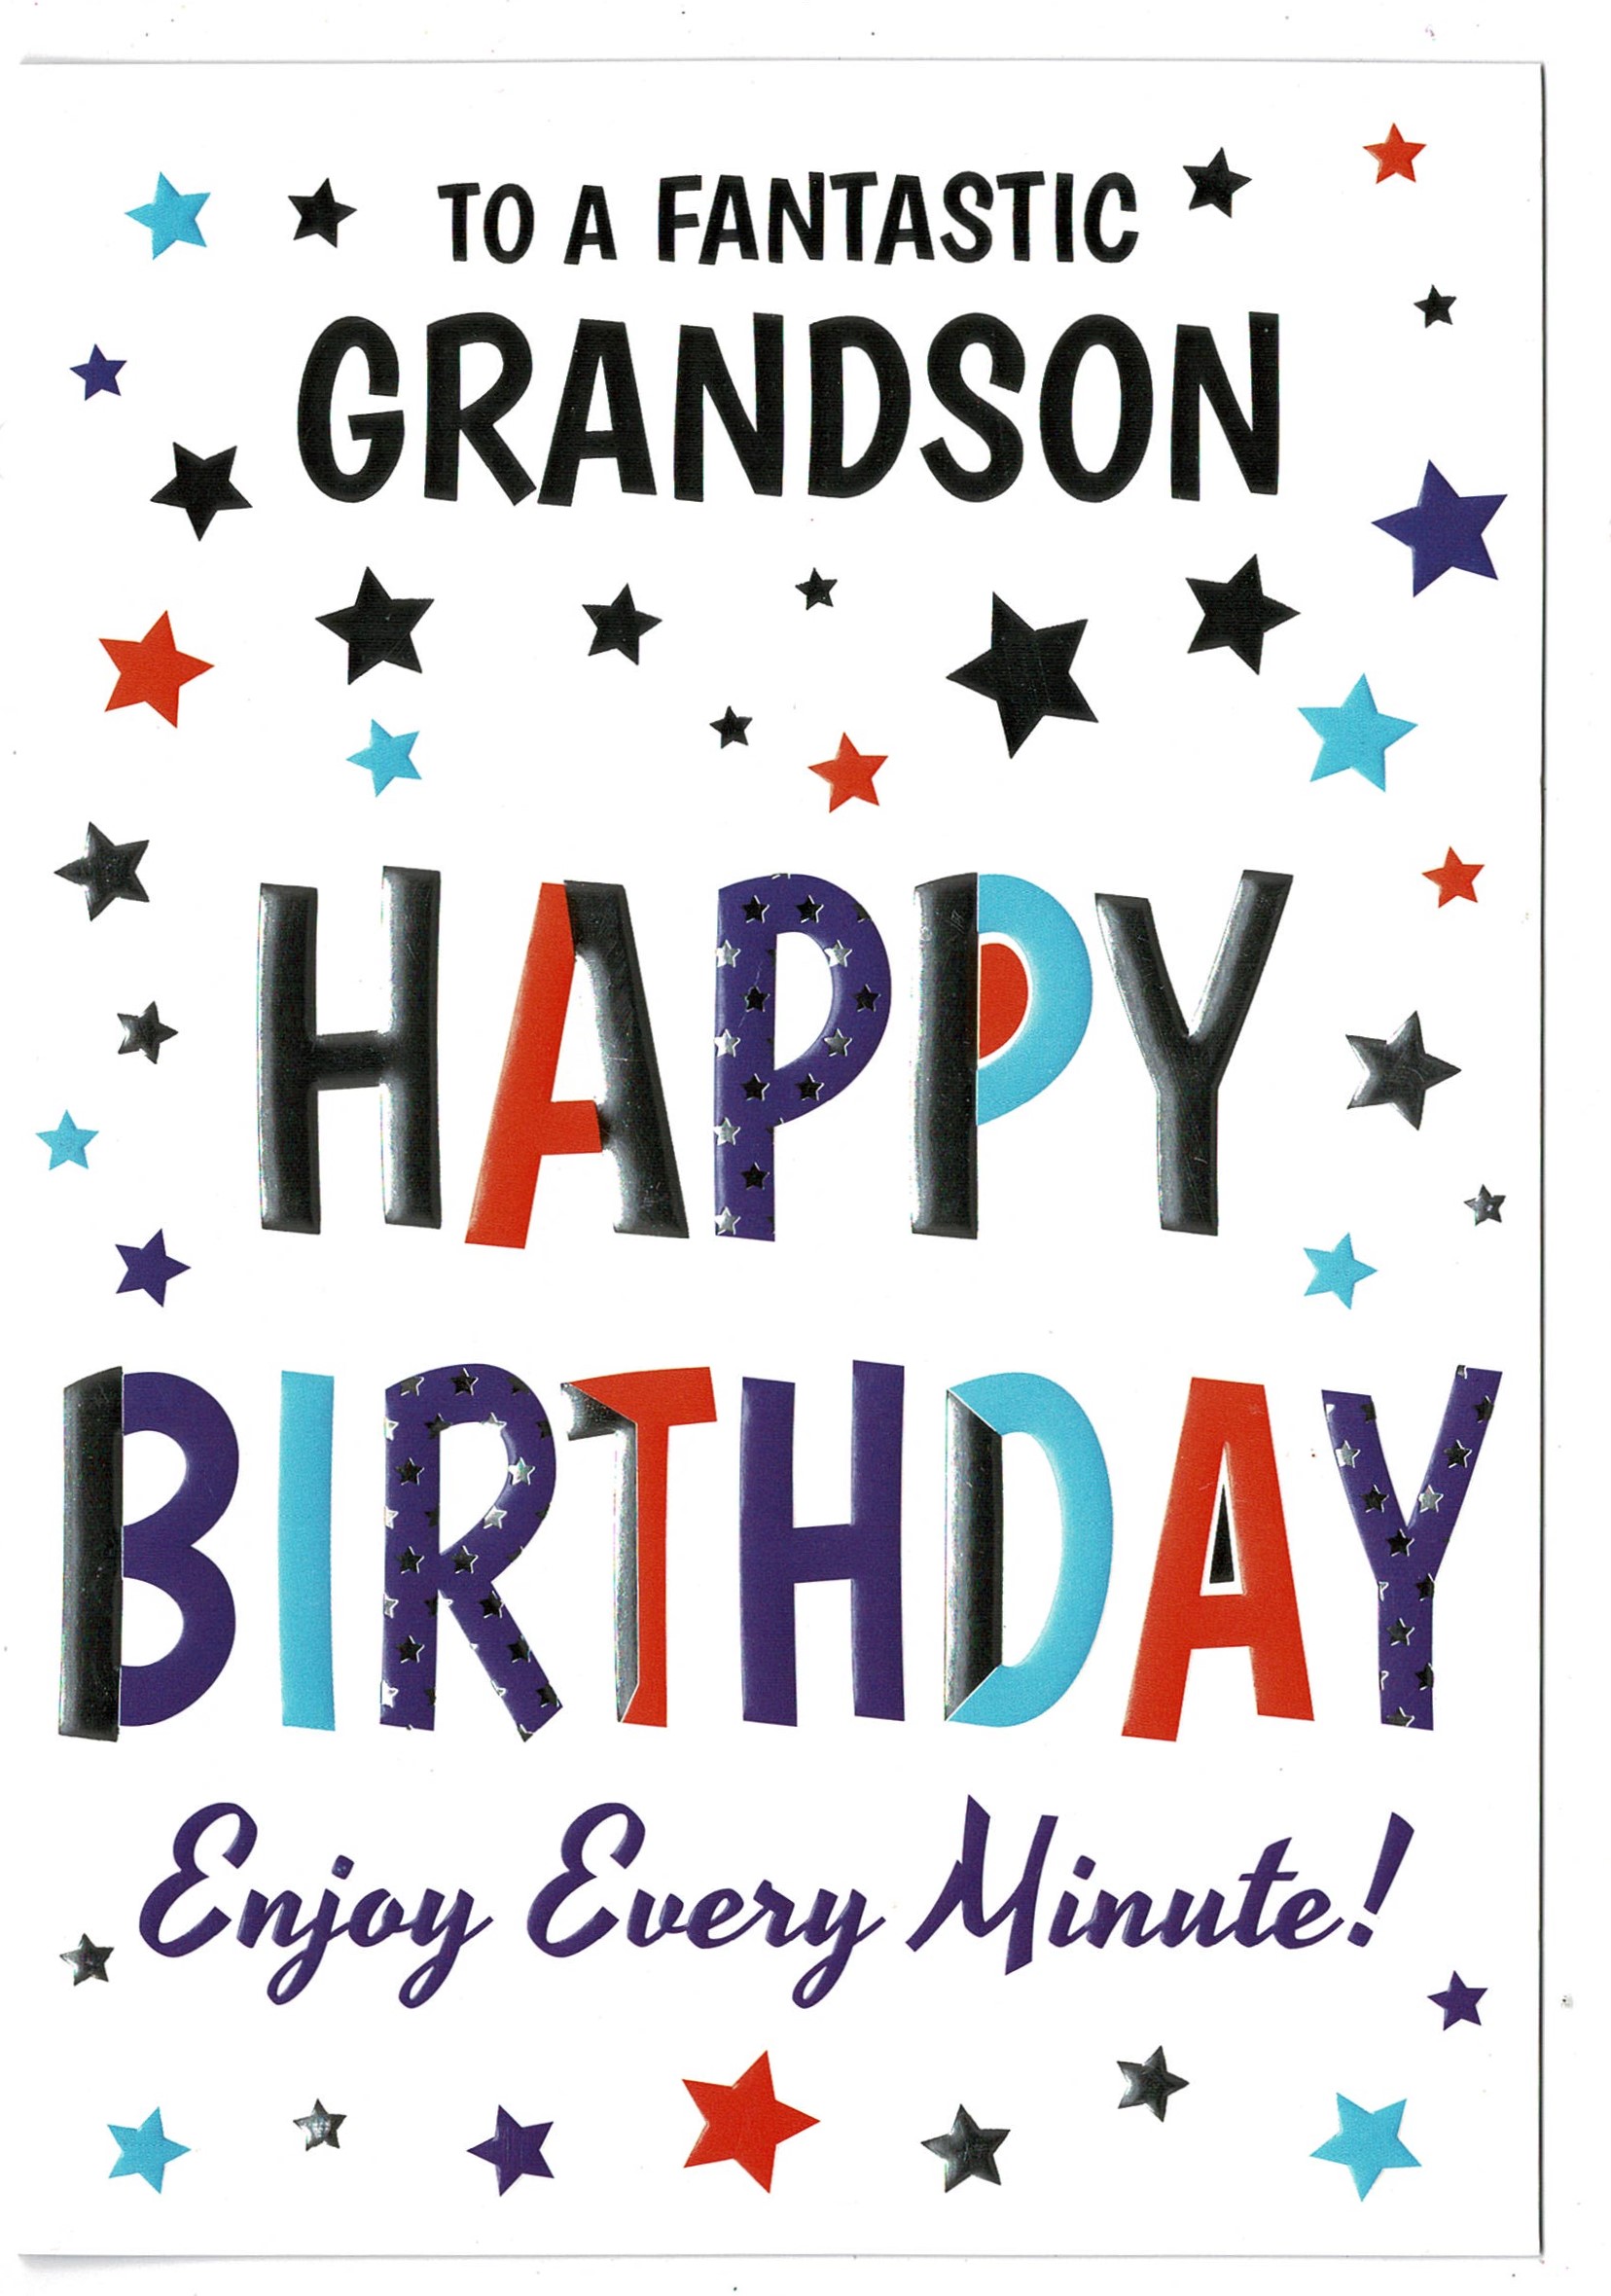 Grandson Birthday Card To A Fantastic Grandson Happy Birthday With